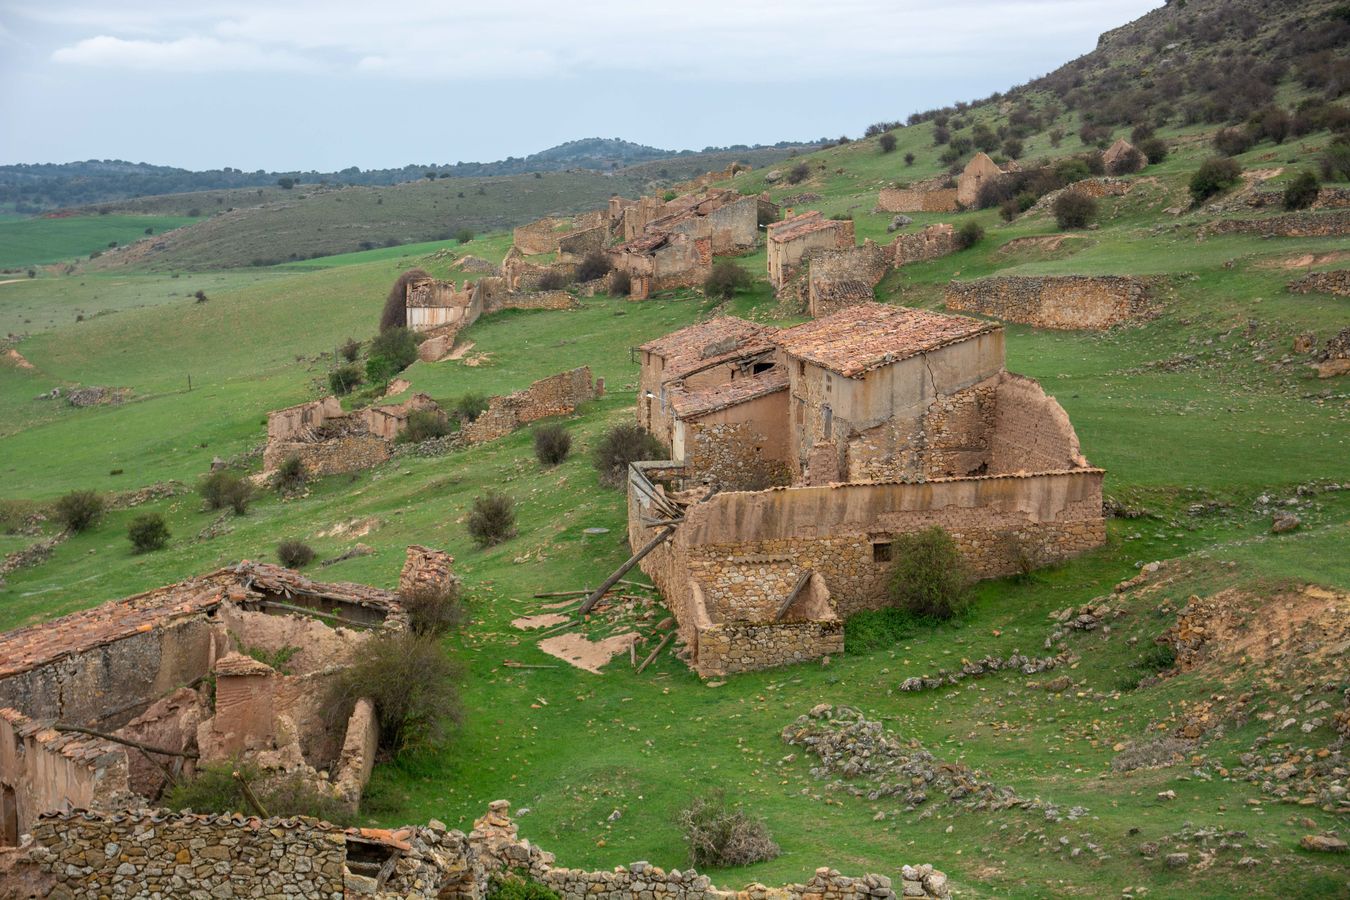 Sauquillo de Alcázar (Soria)